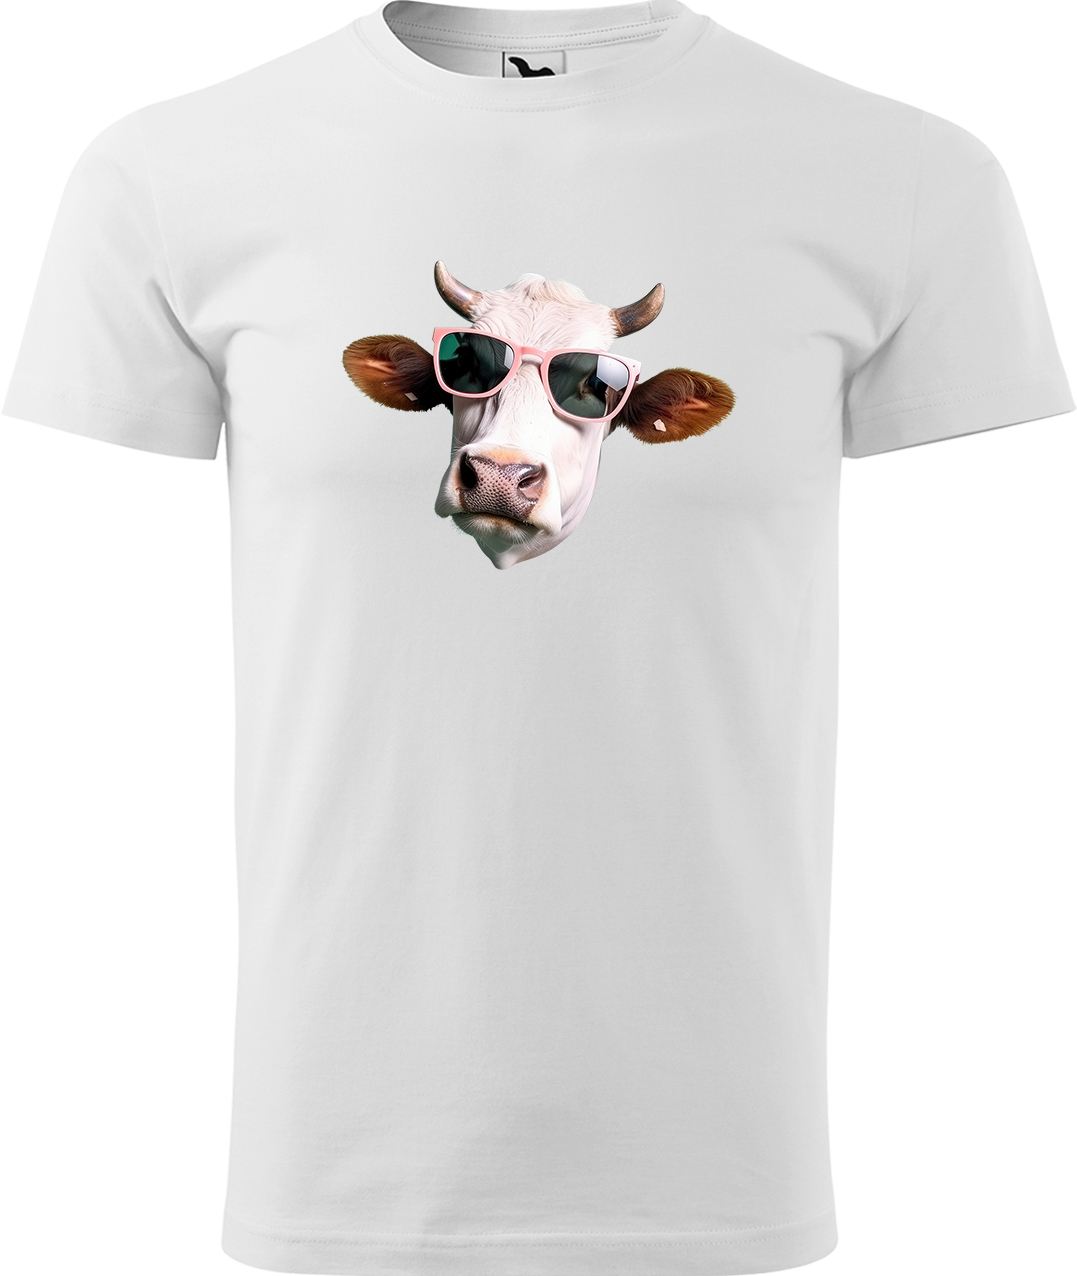 Pánské tričko s krávou - Kráva v brýlích Velikost: M, Barva: Bílá (00), Střih: pánský